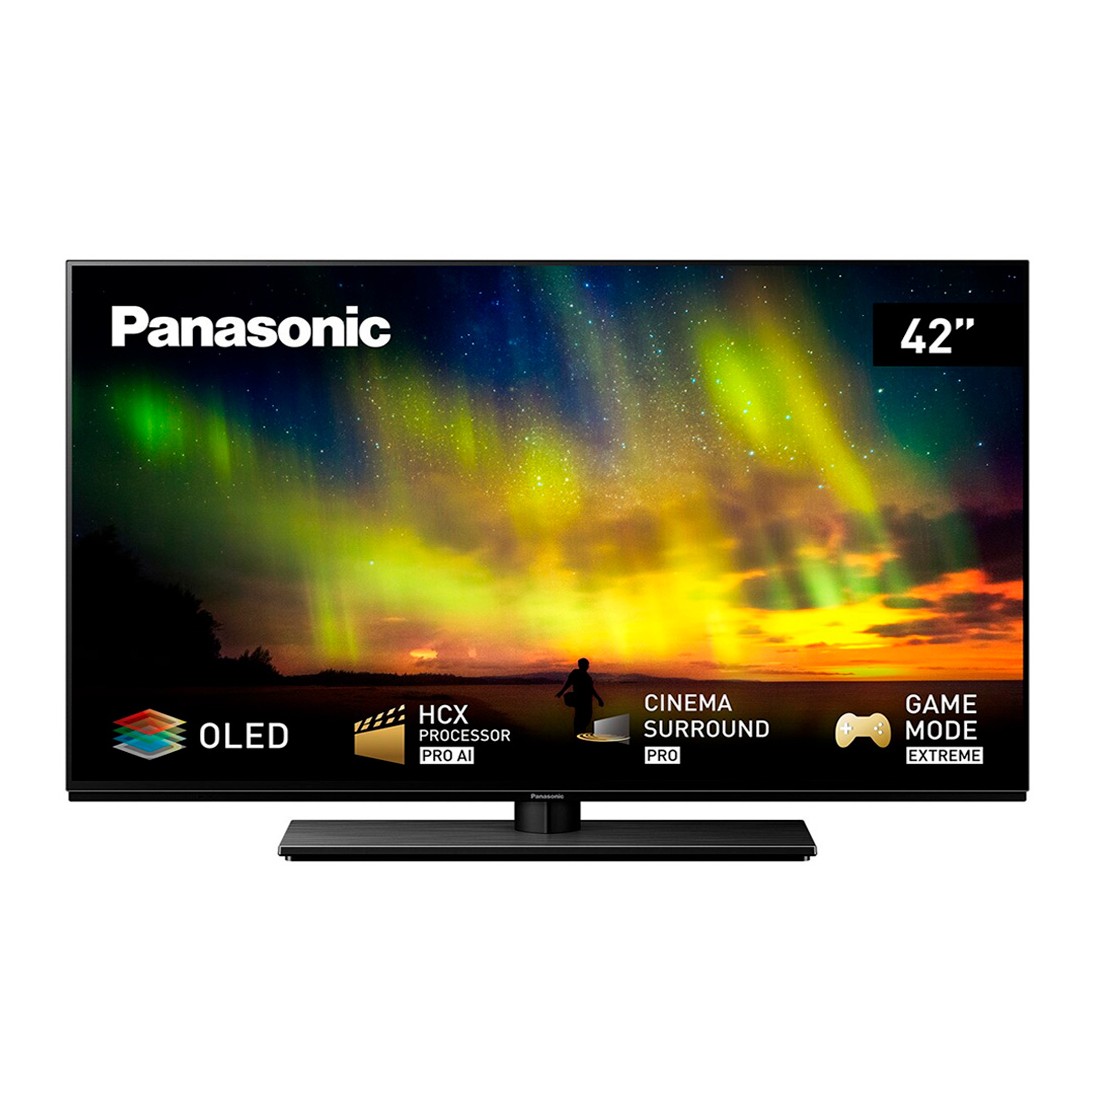 TV OLED - Panasonic TX-42LZ980E, pulgadas, 4K HDR, Procesador HCX Pro AI, Dolby Vision IQ, HDR10